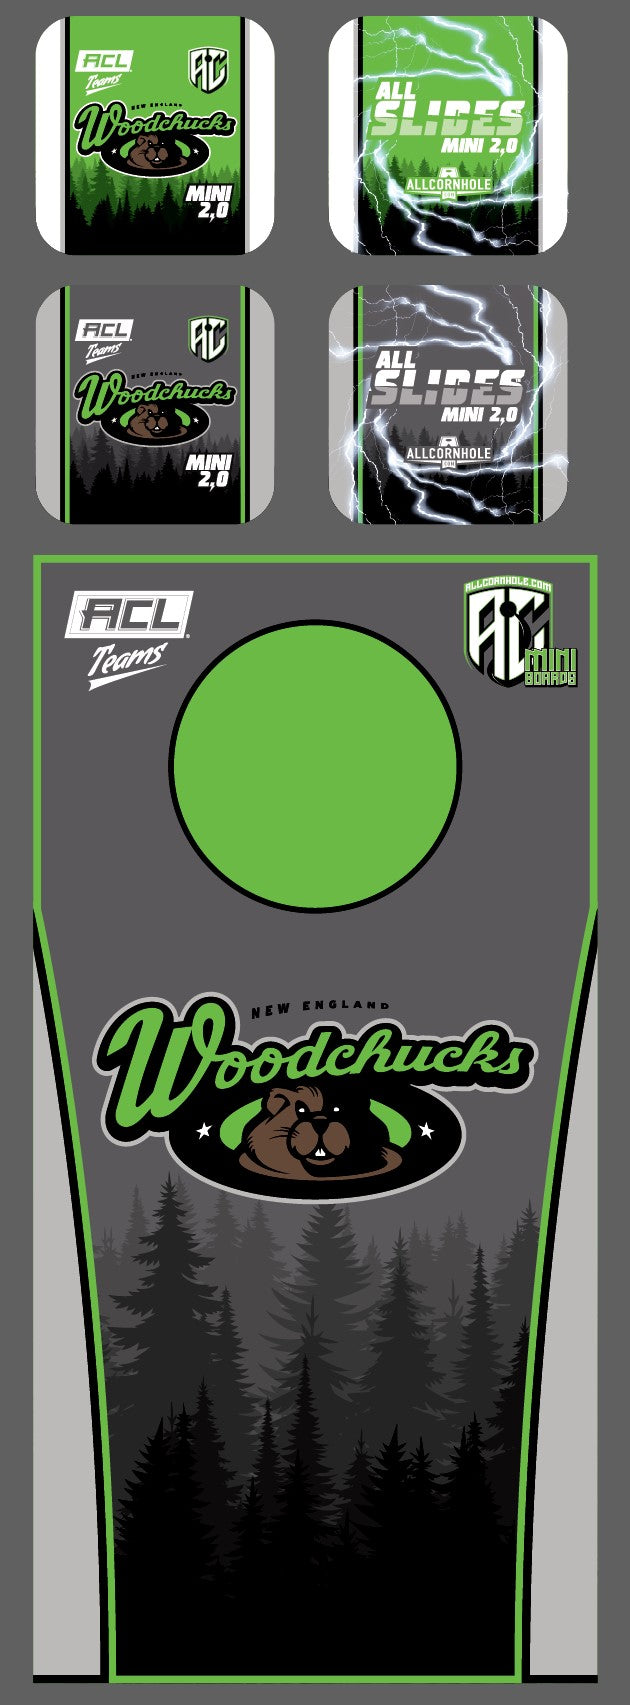 ACL Teams mini Cornhole Board Set - New England Woodchucks